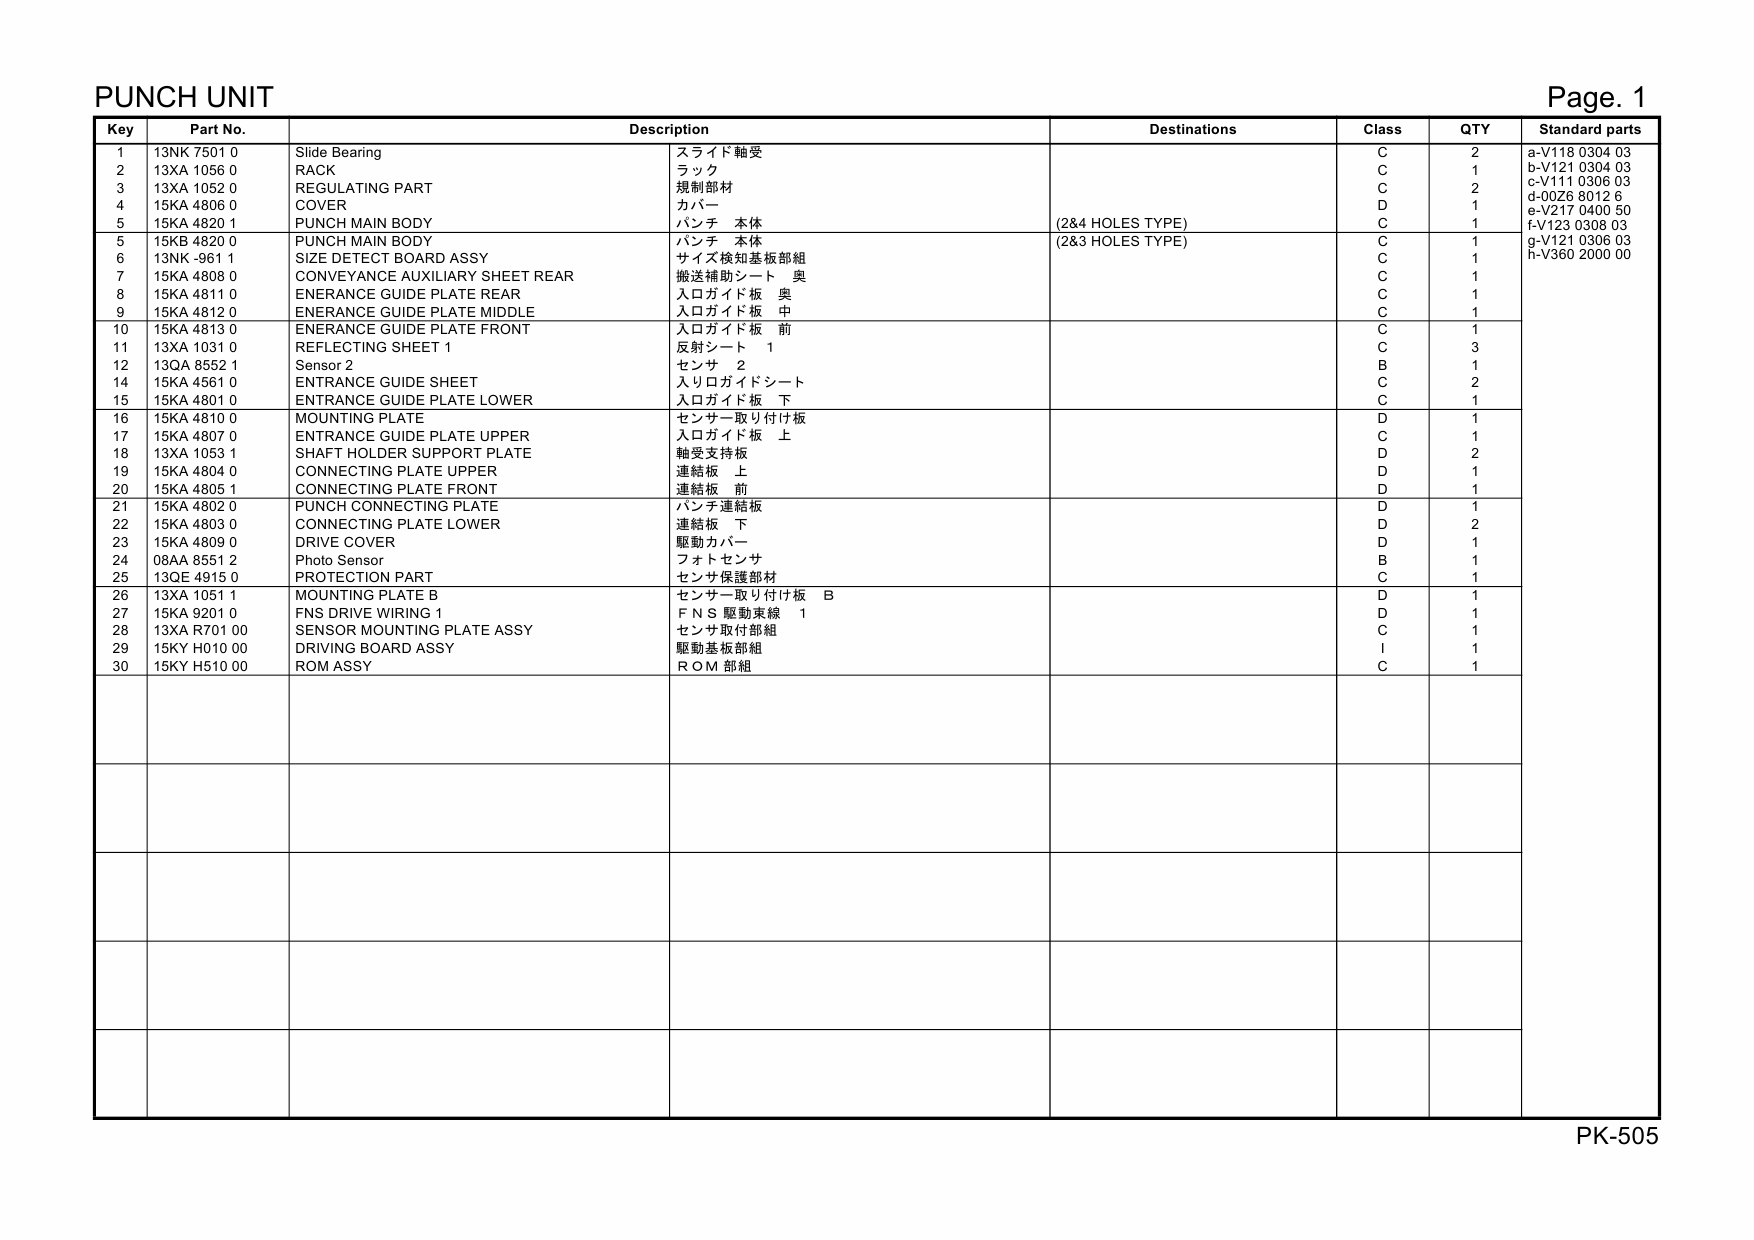 Konica-Minolta Options PK-505 15UT Parts Manual-3